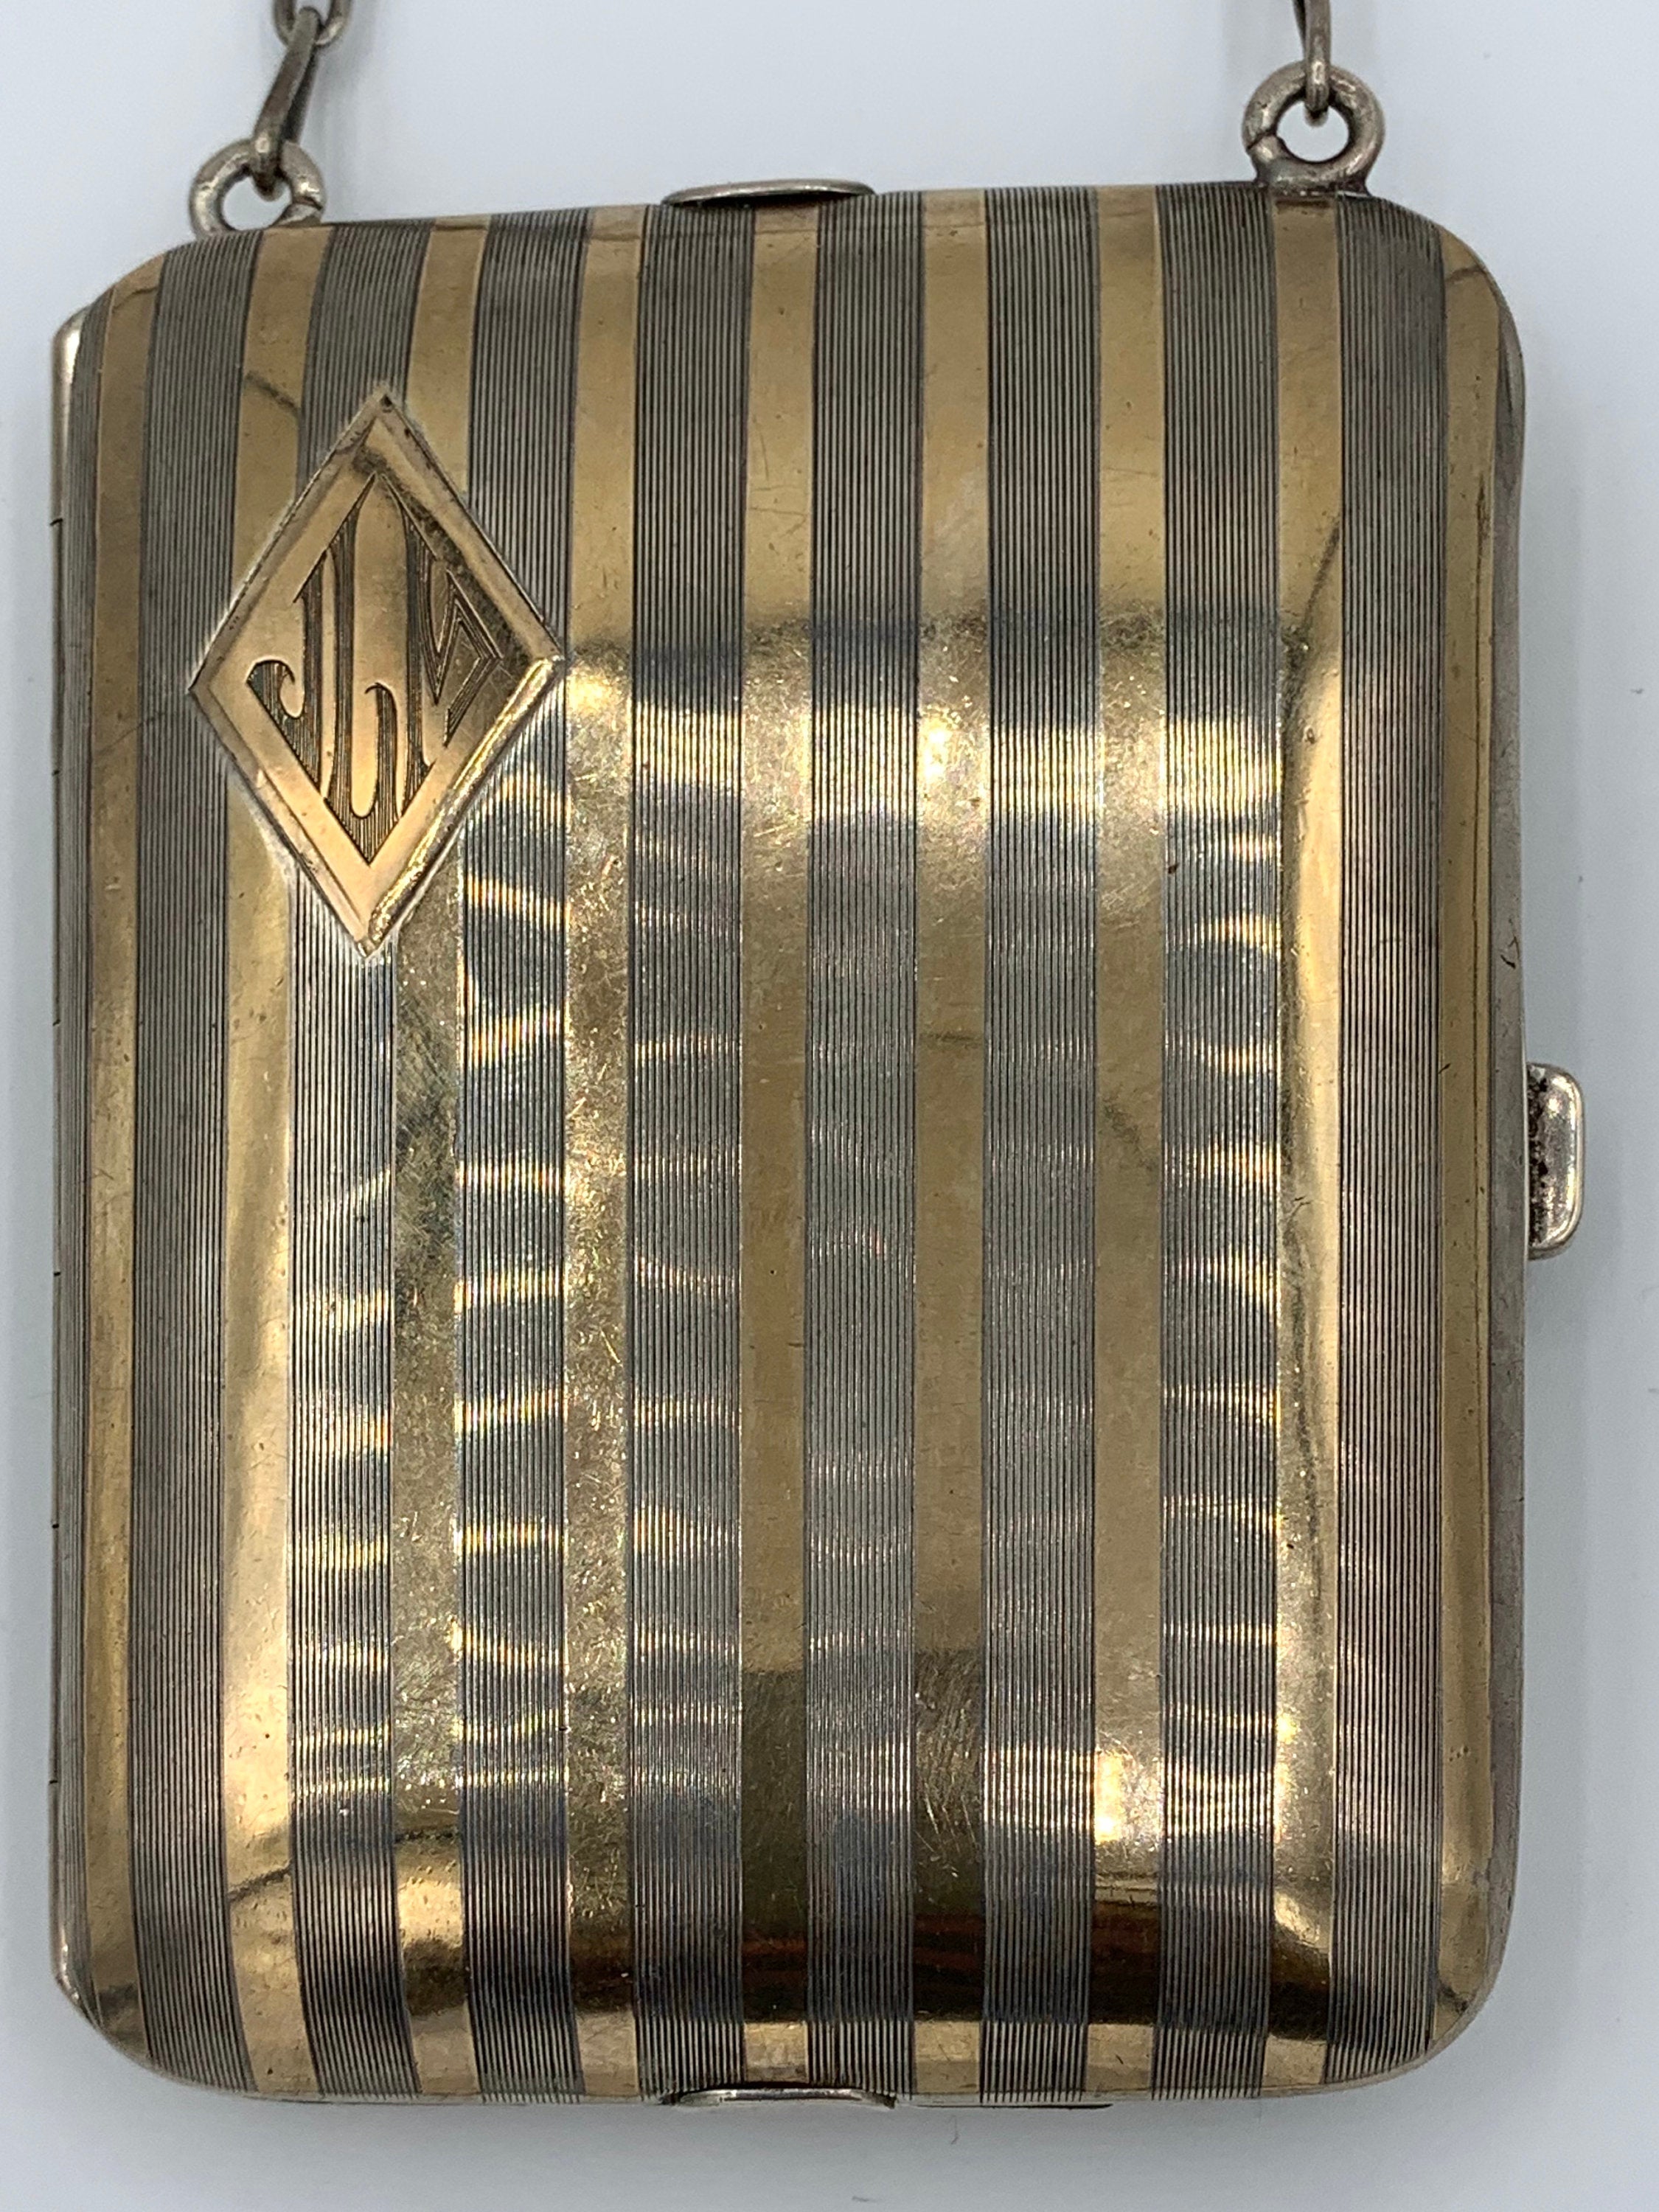 Adie & Lovekin - Antique Silver Card Case in Form of a Purse, Birmingham  1910, Adie and Lovekin